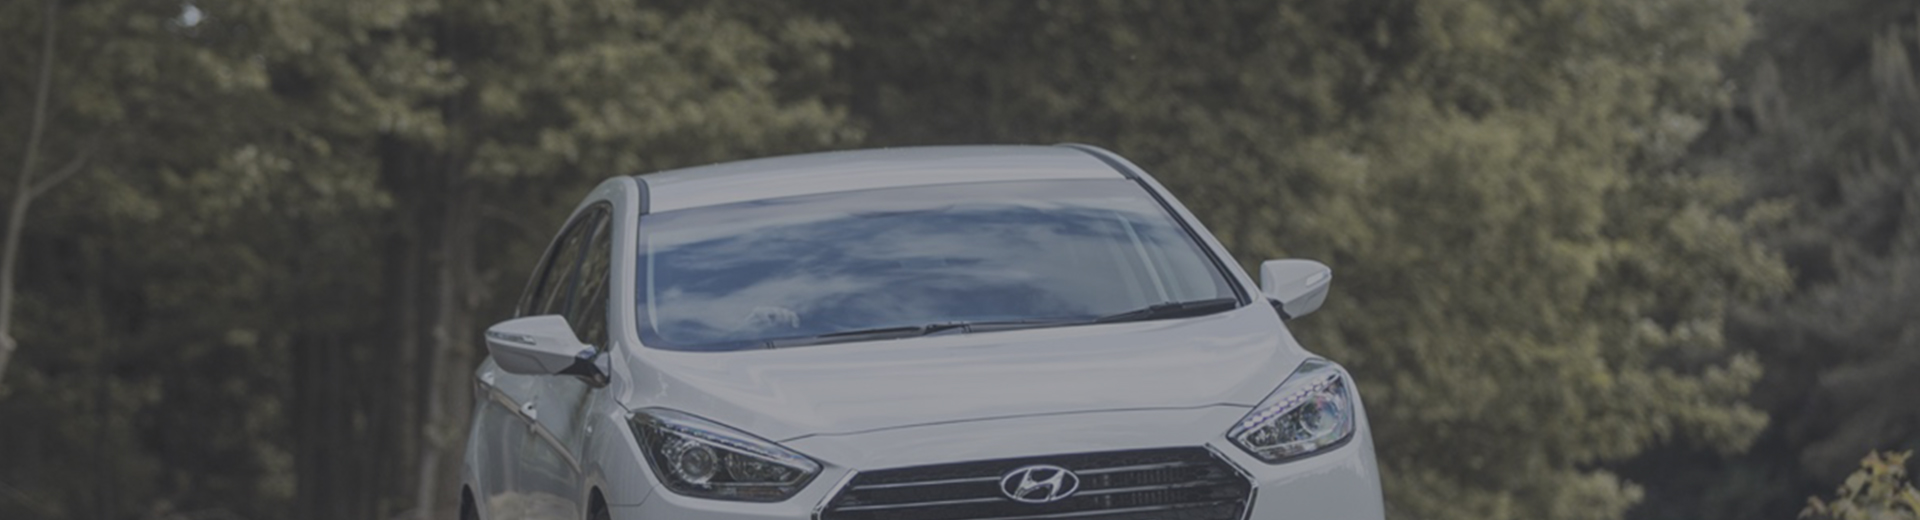 Hyundai Santa Fe Lease Deals